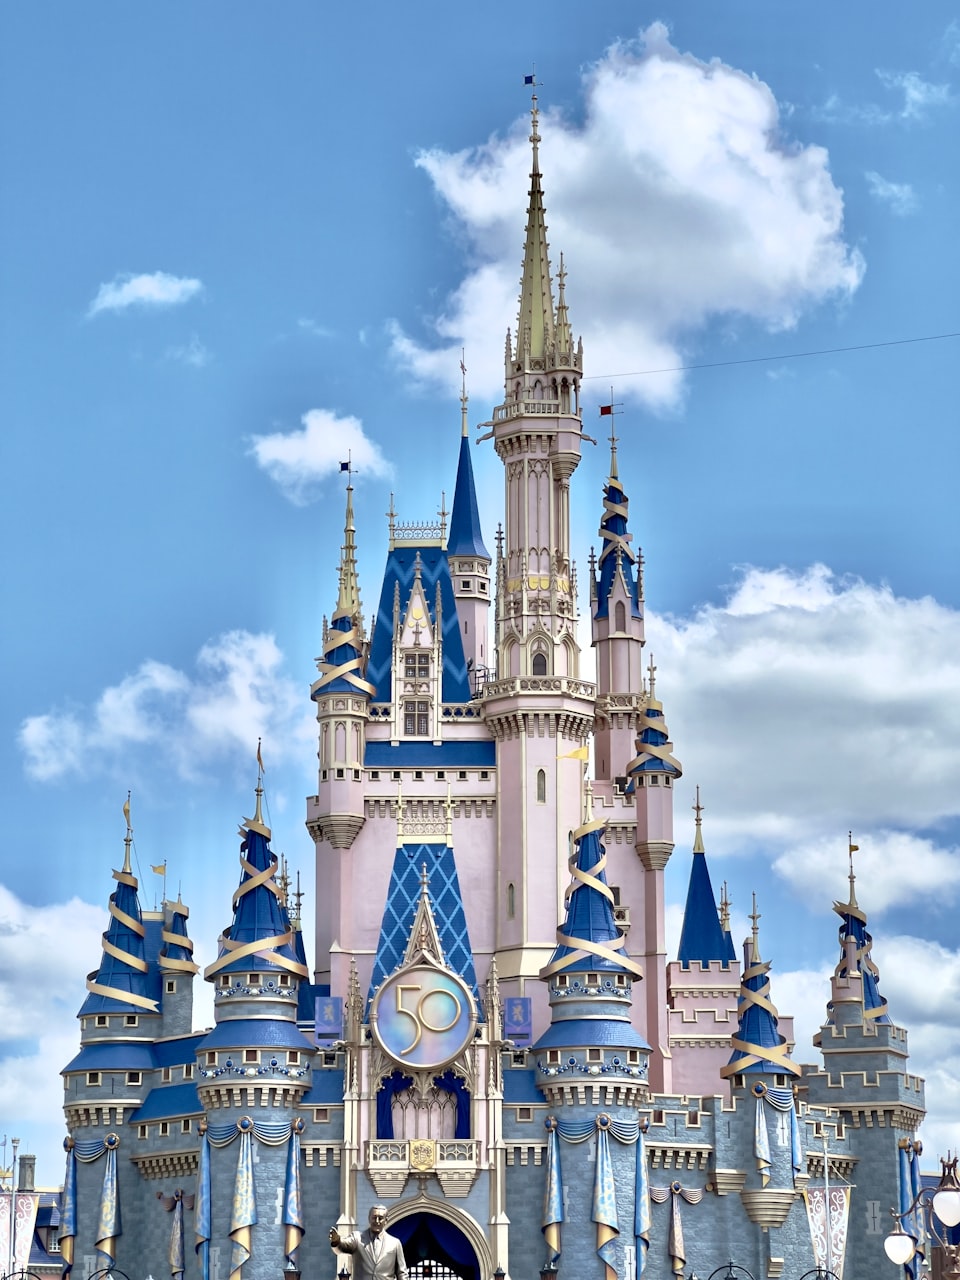 Walt Disney World Magic Kingdom castle with 50th anniversary badge.